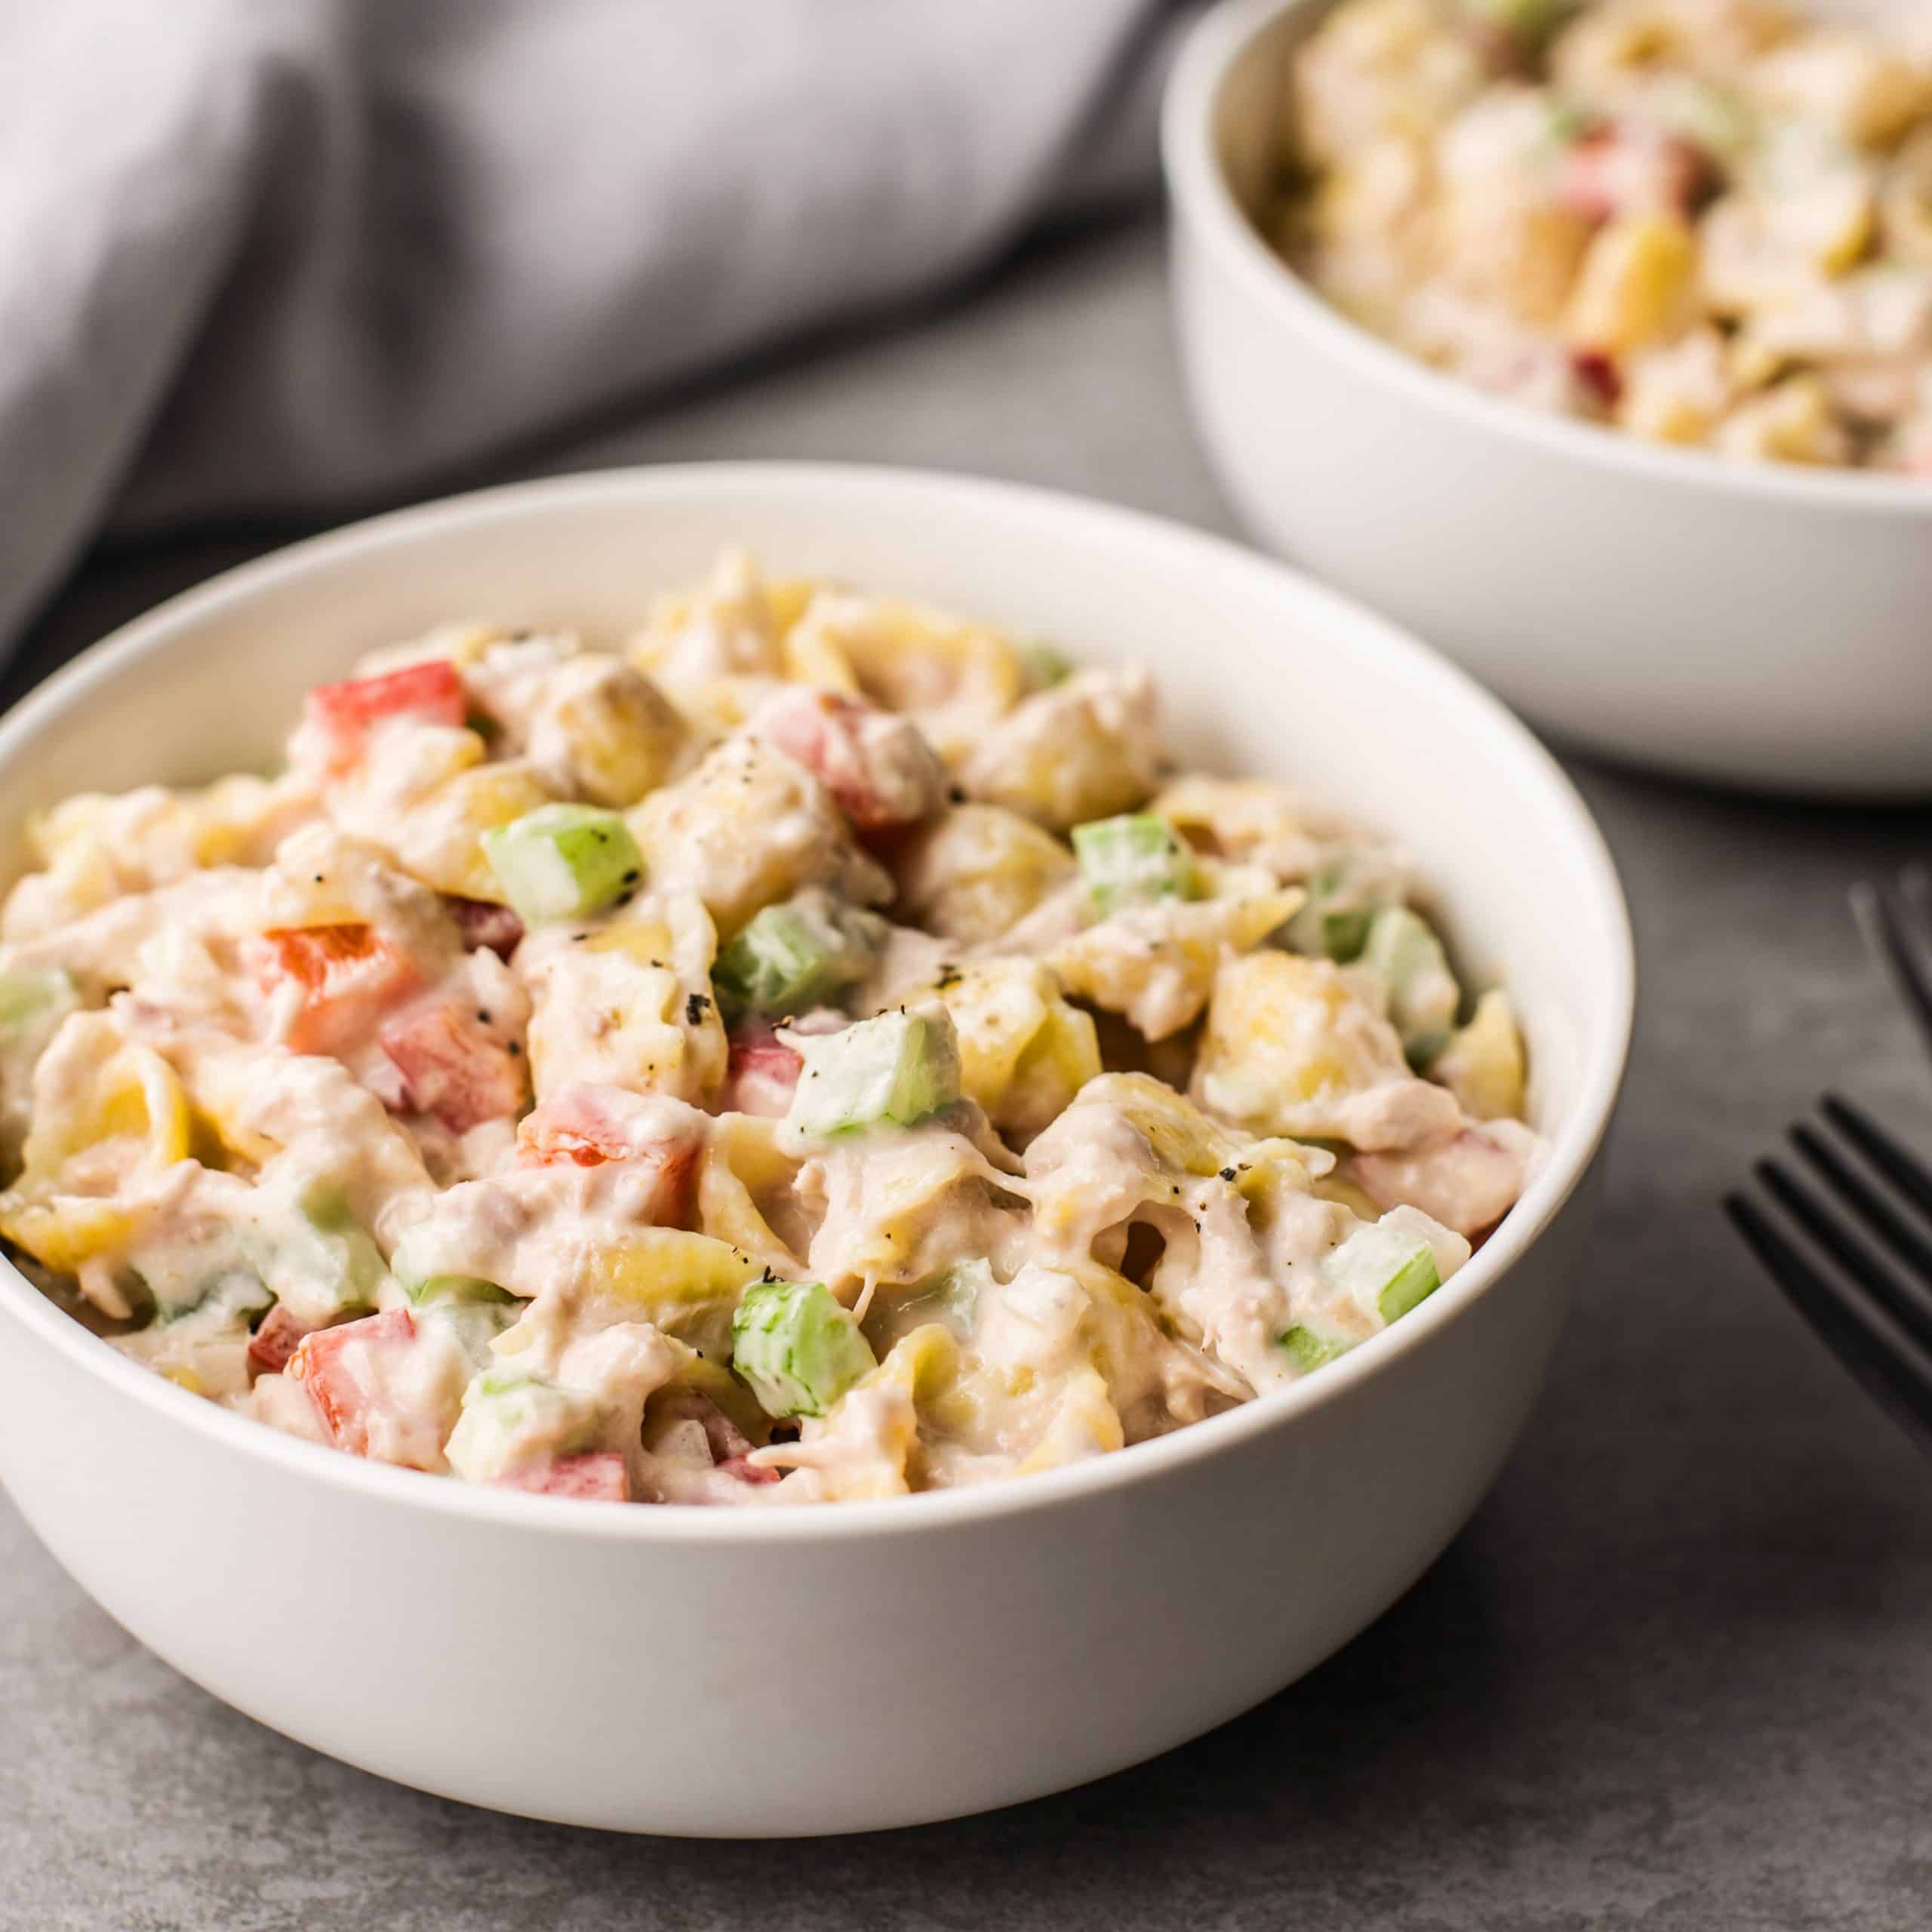 Easy Tuna Pasta Salad Recipe With Mayo